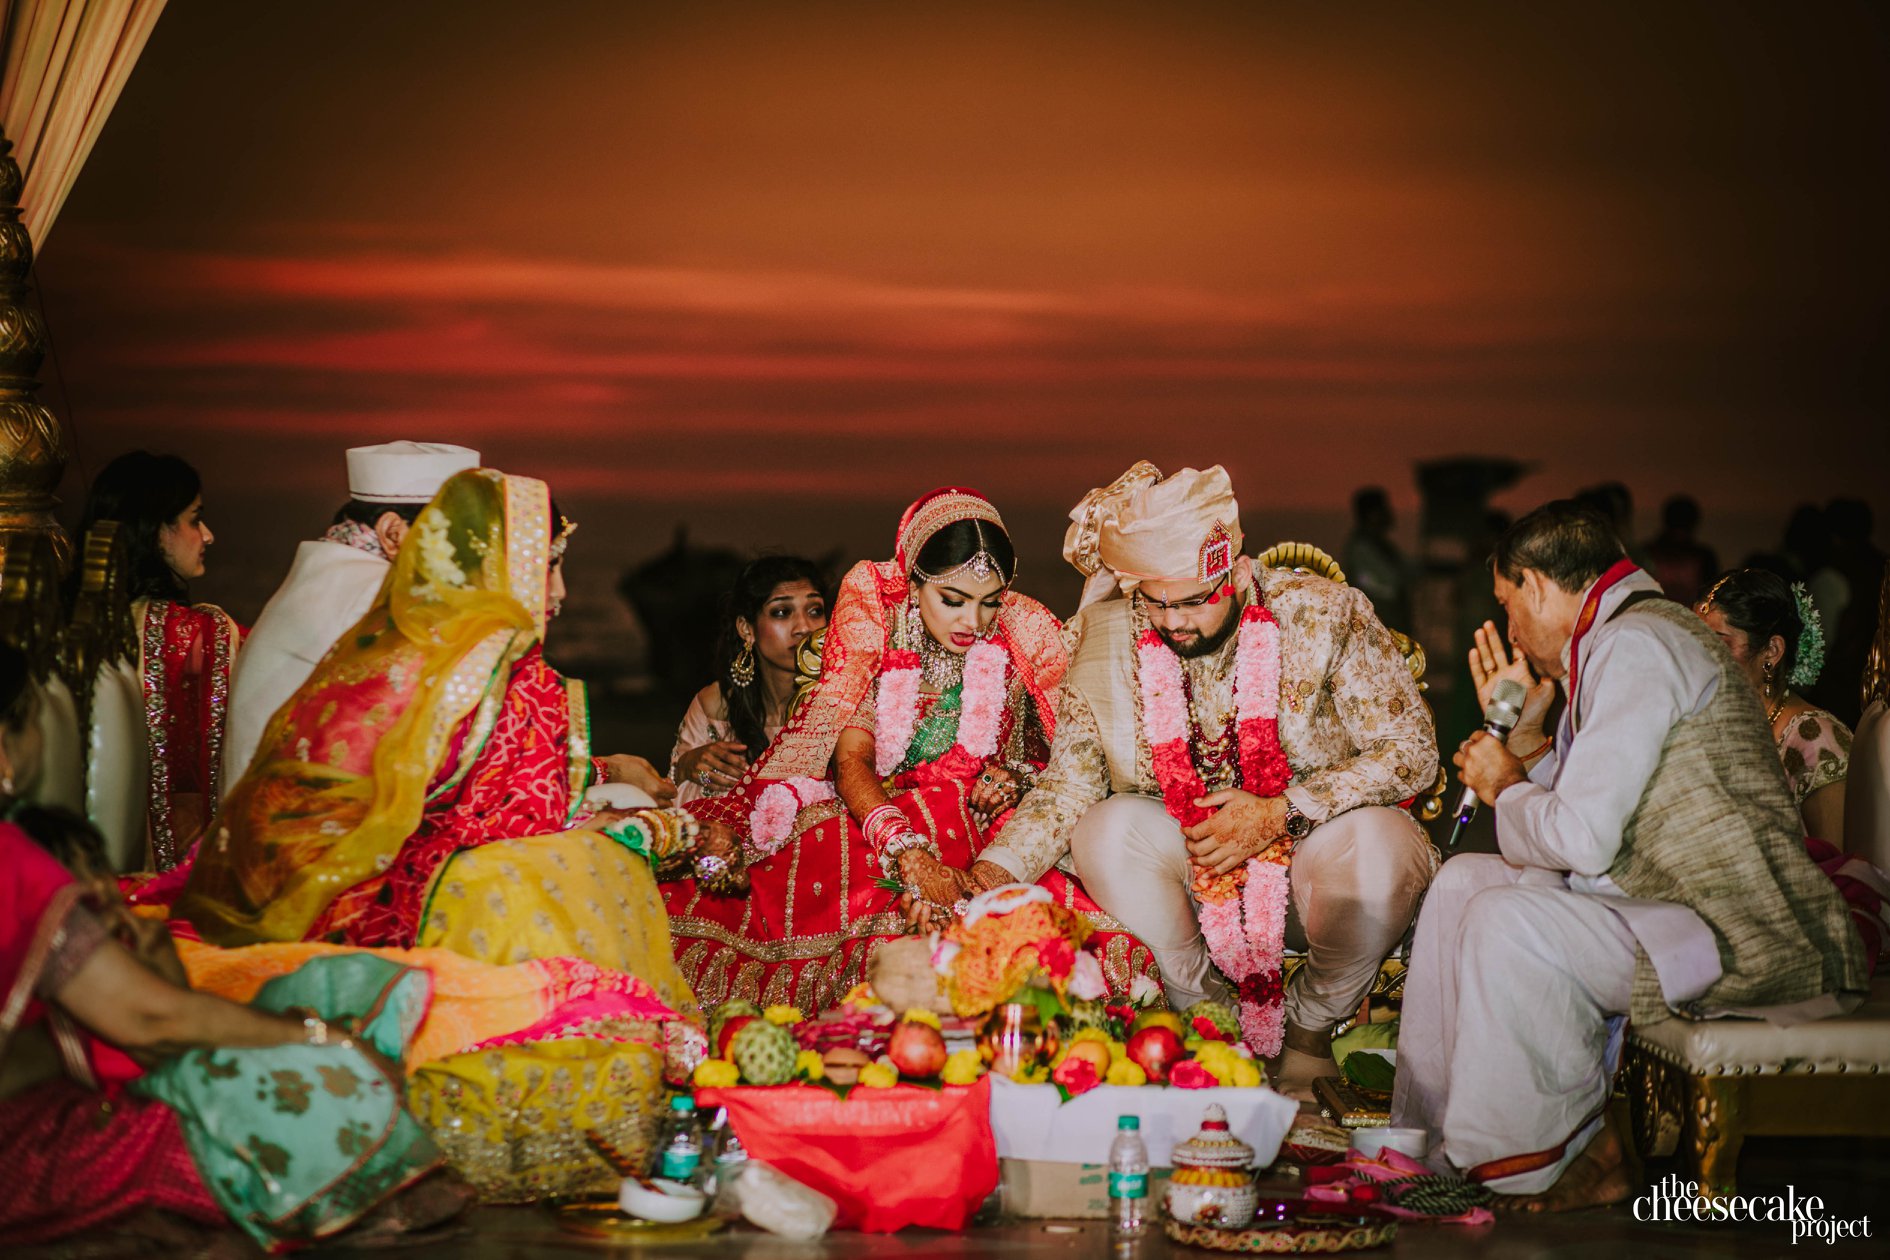 The Cheesecake Project Wedding Photographer, Mumbai